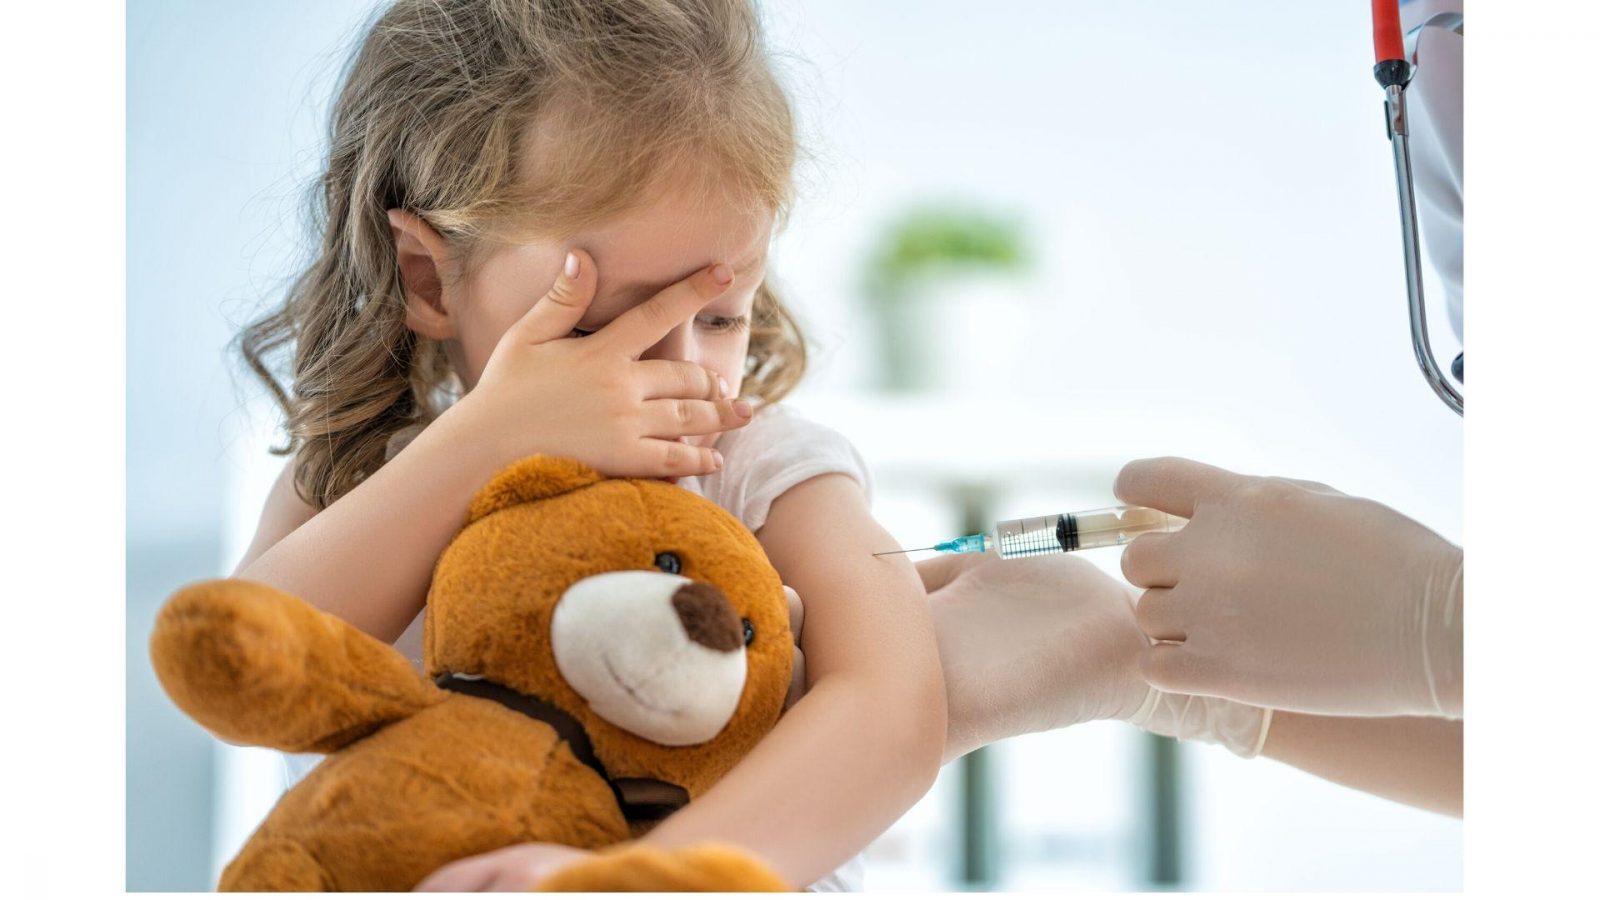 Child Vaccine